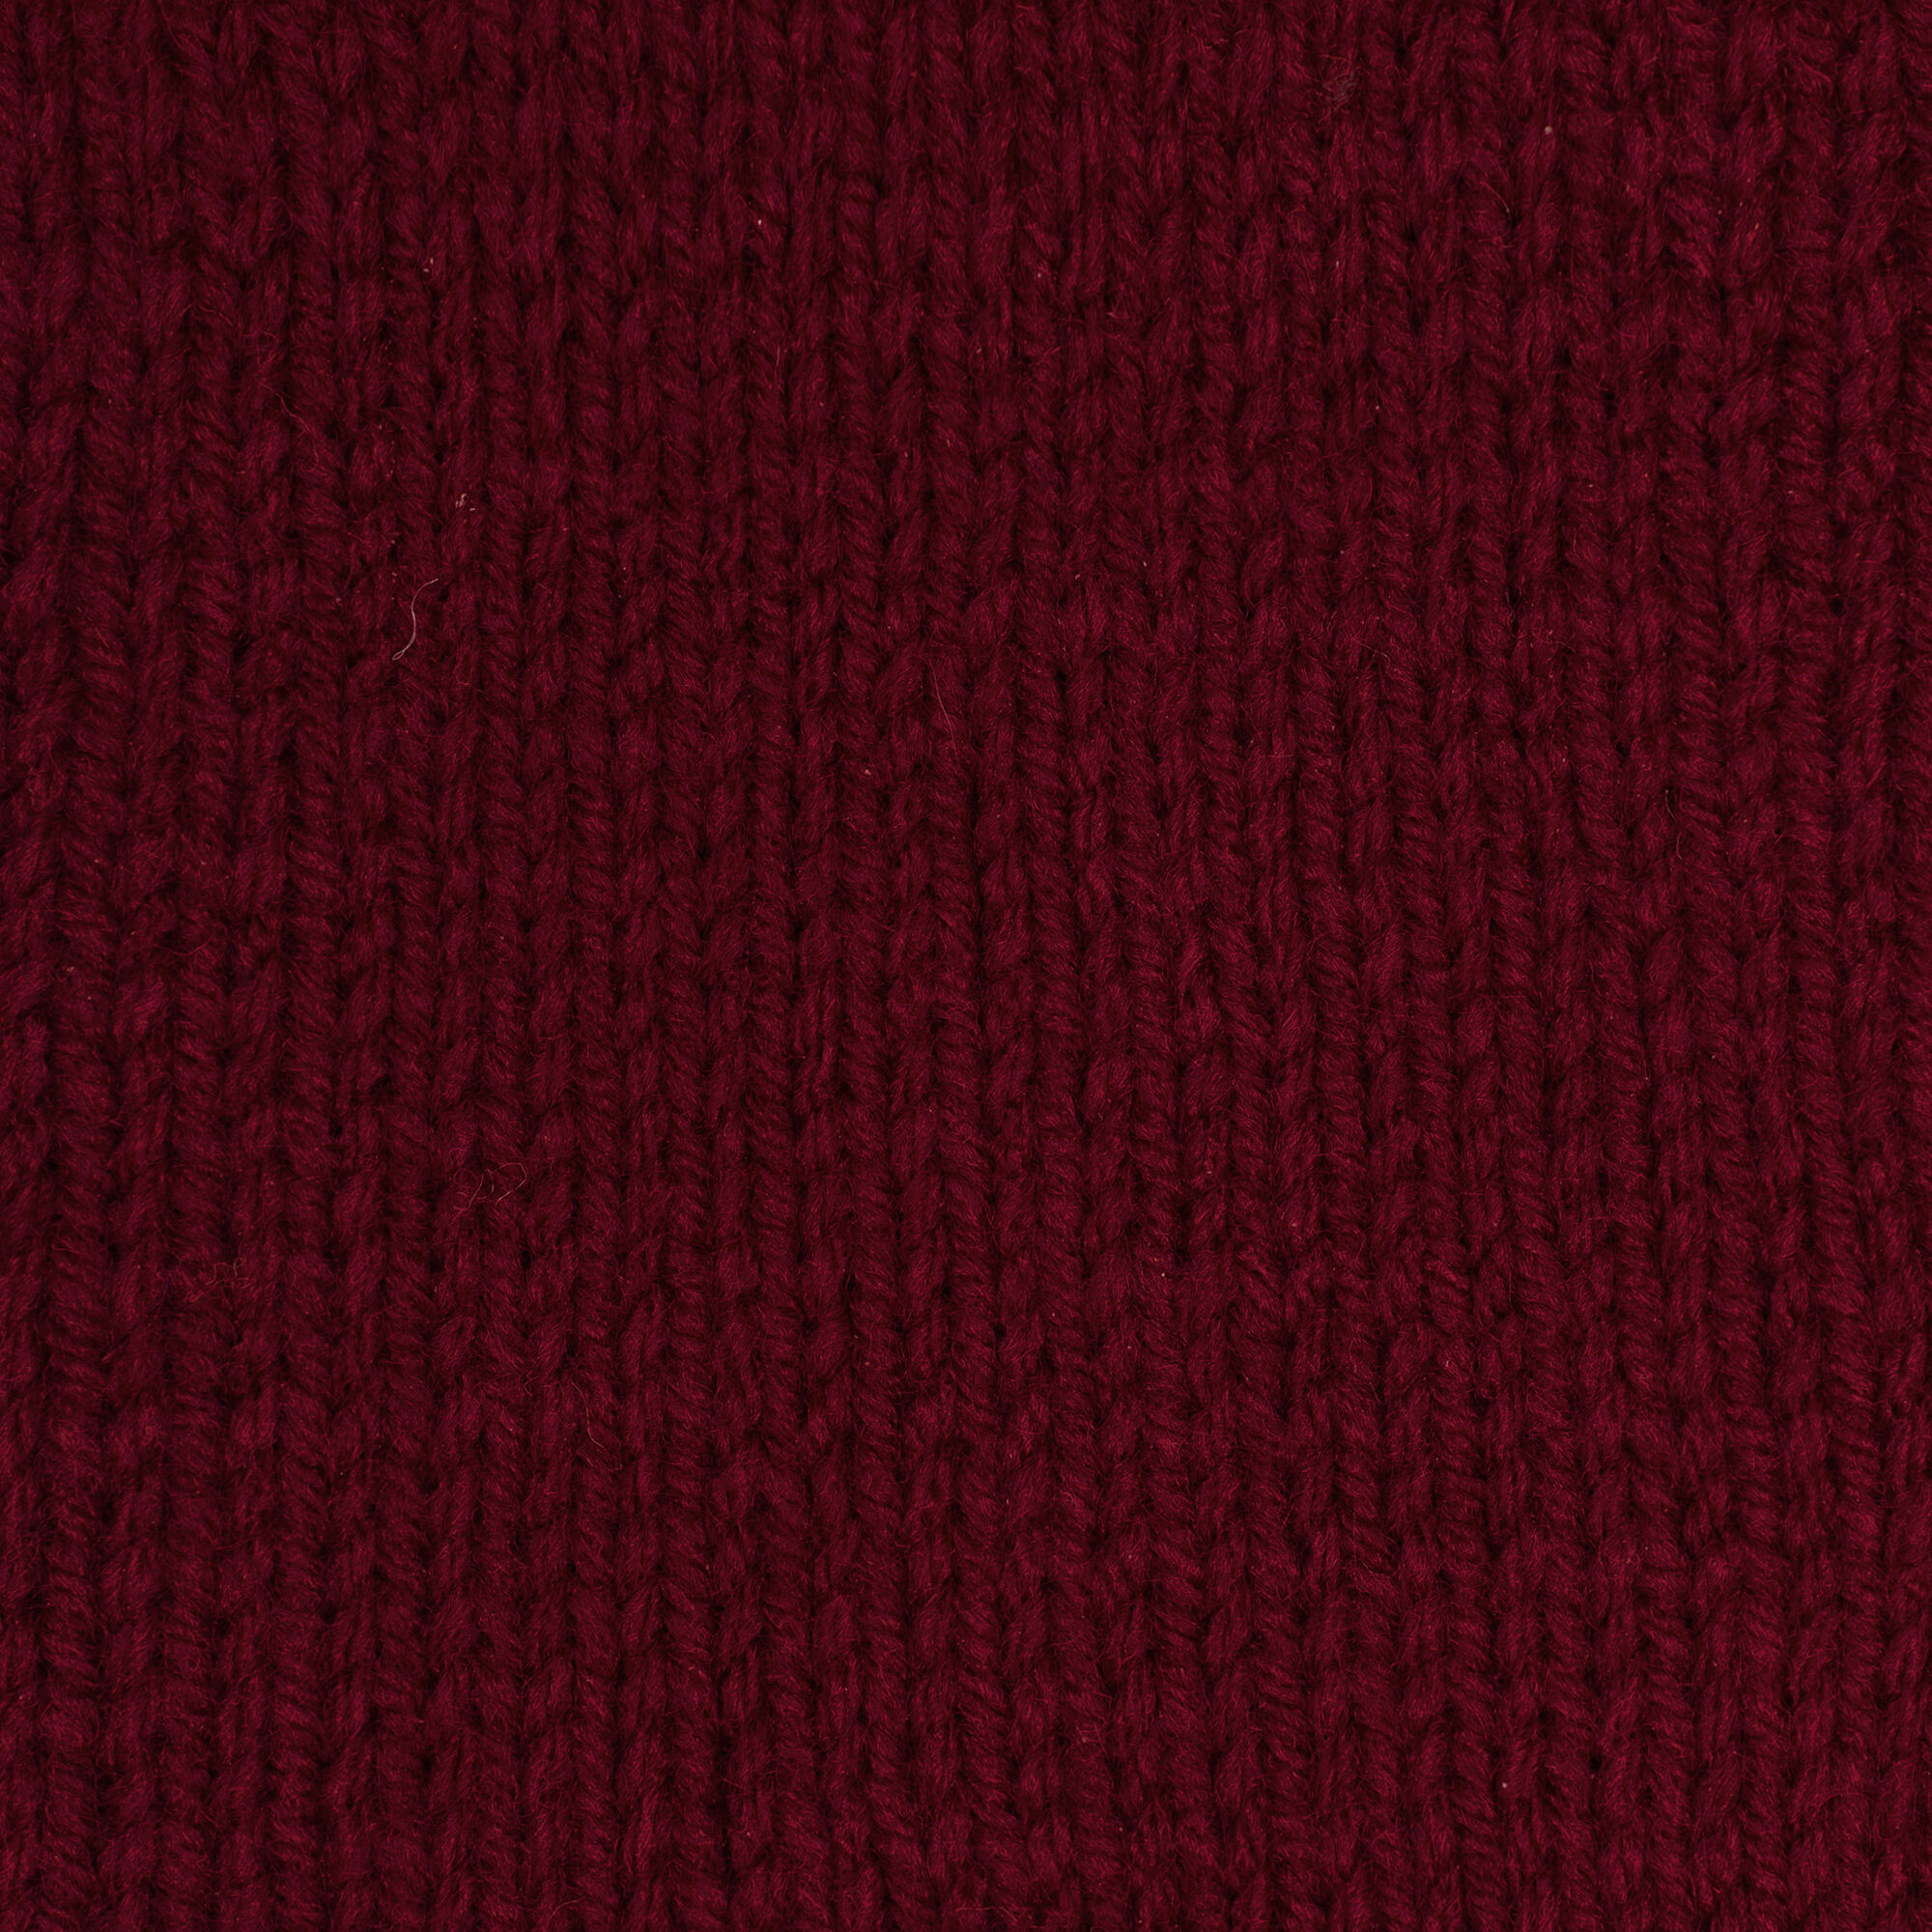 Red Heart Super Saver Medium Acrylic Burgundy Yarn, 364 yd - image 4 of 18